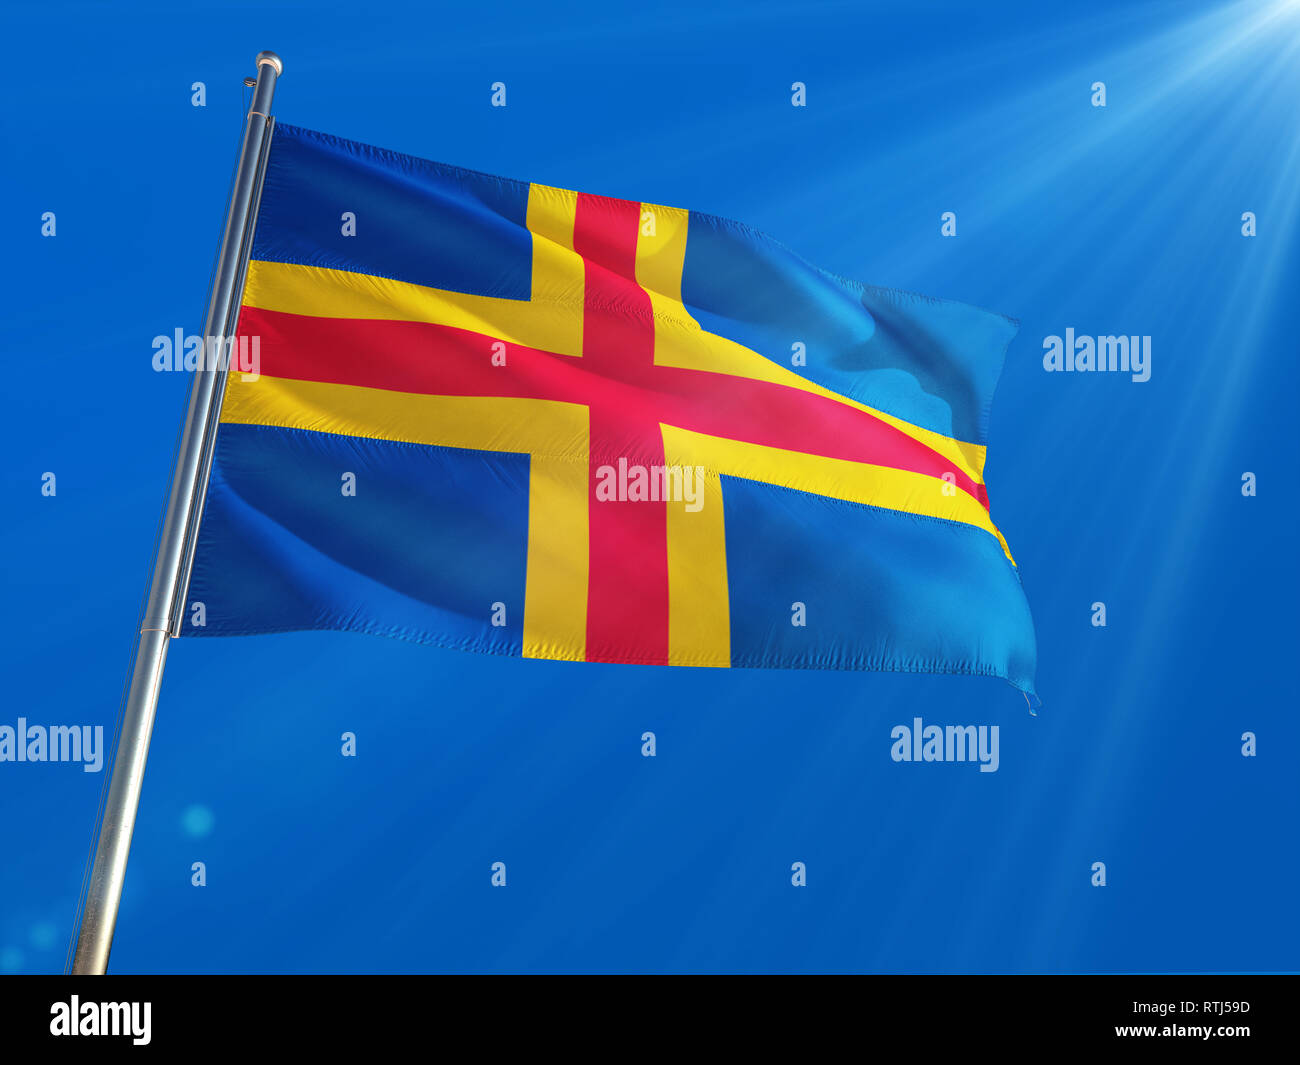 Aland Islands National Flag Waving on pole against deep blue sky background. High Definition Stock Photo